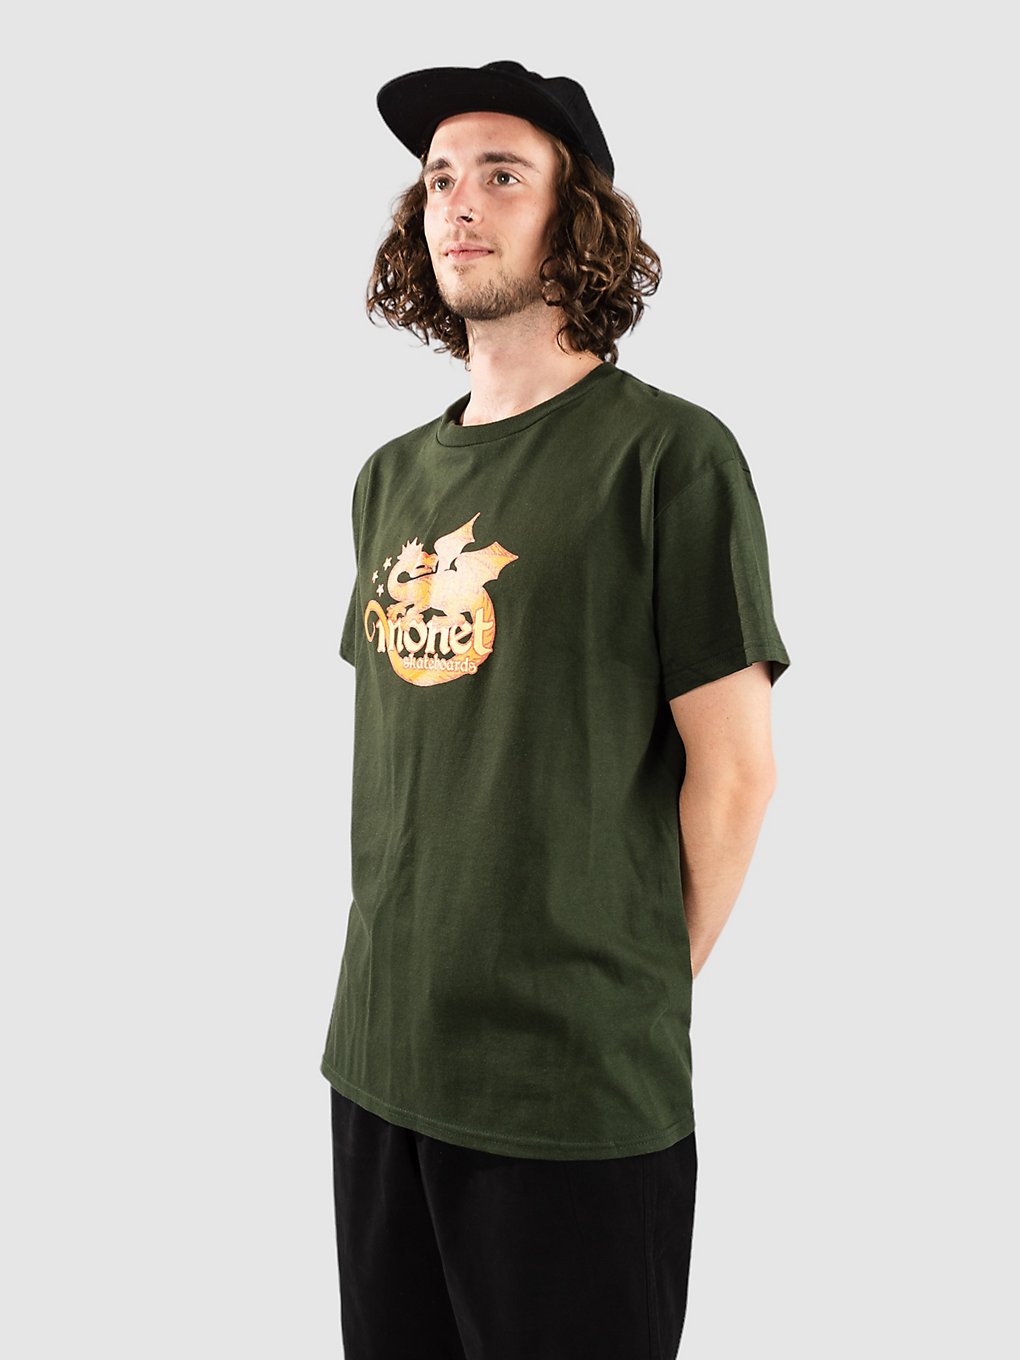 Monet Skateboards Monets Dragon T-Shirt marine green kaufen